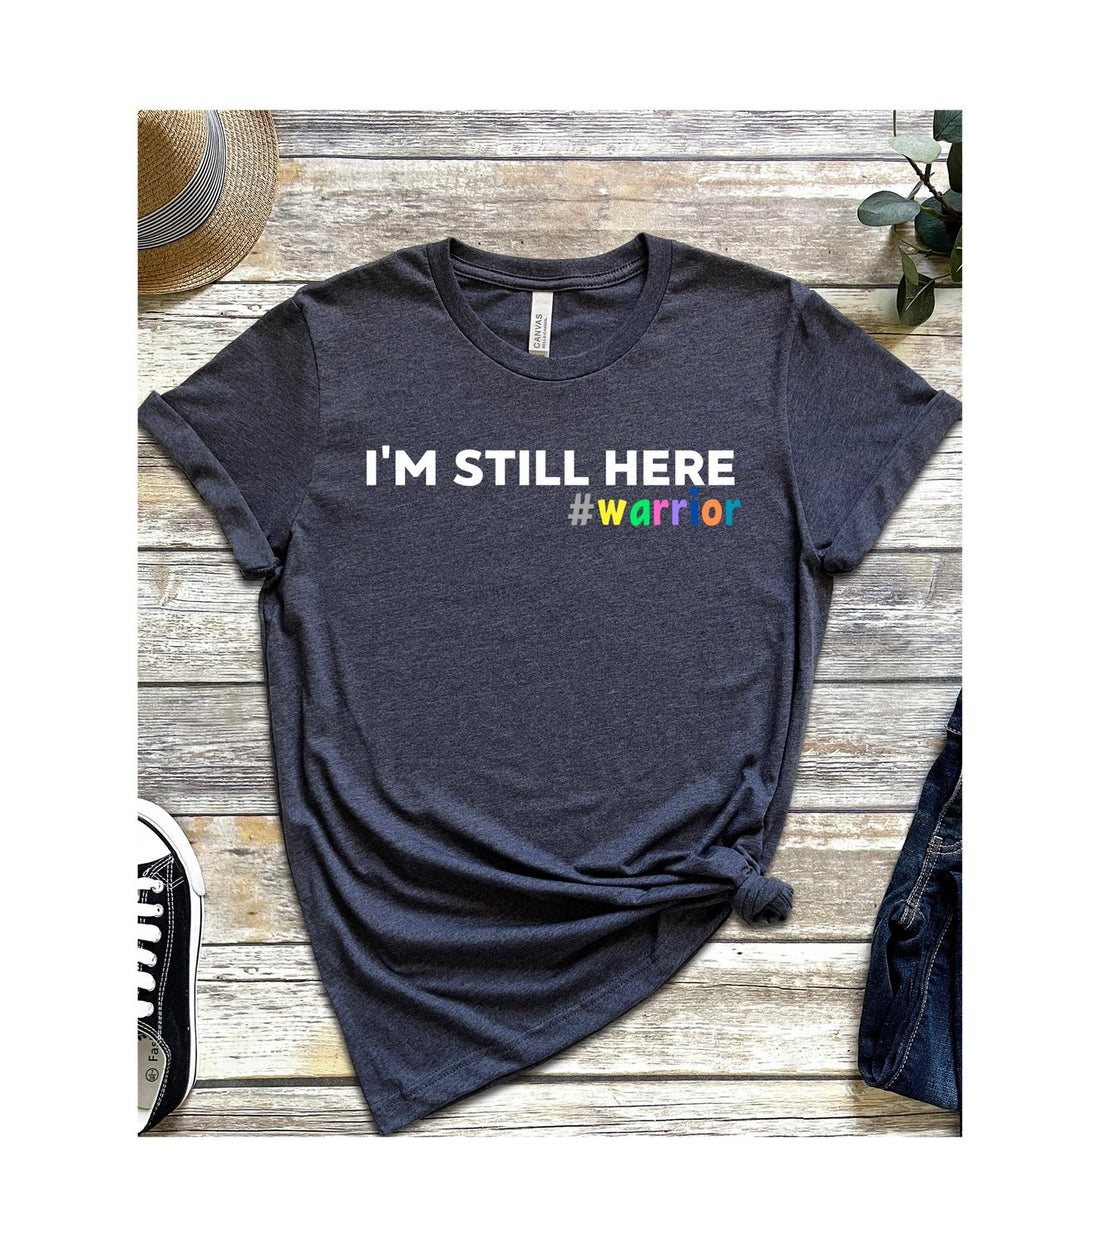 I'm Still Here - T-Shirts - Positively Sassy - I'm Still Here